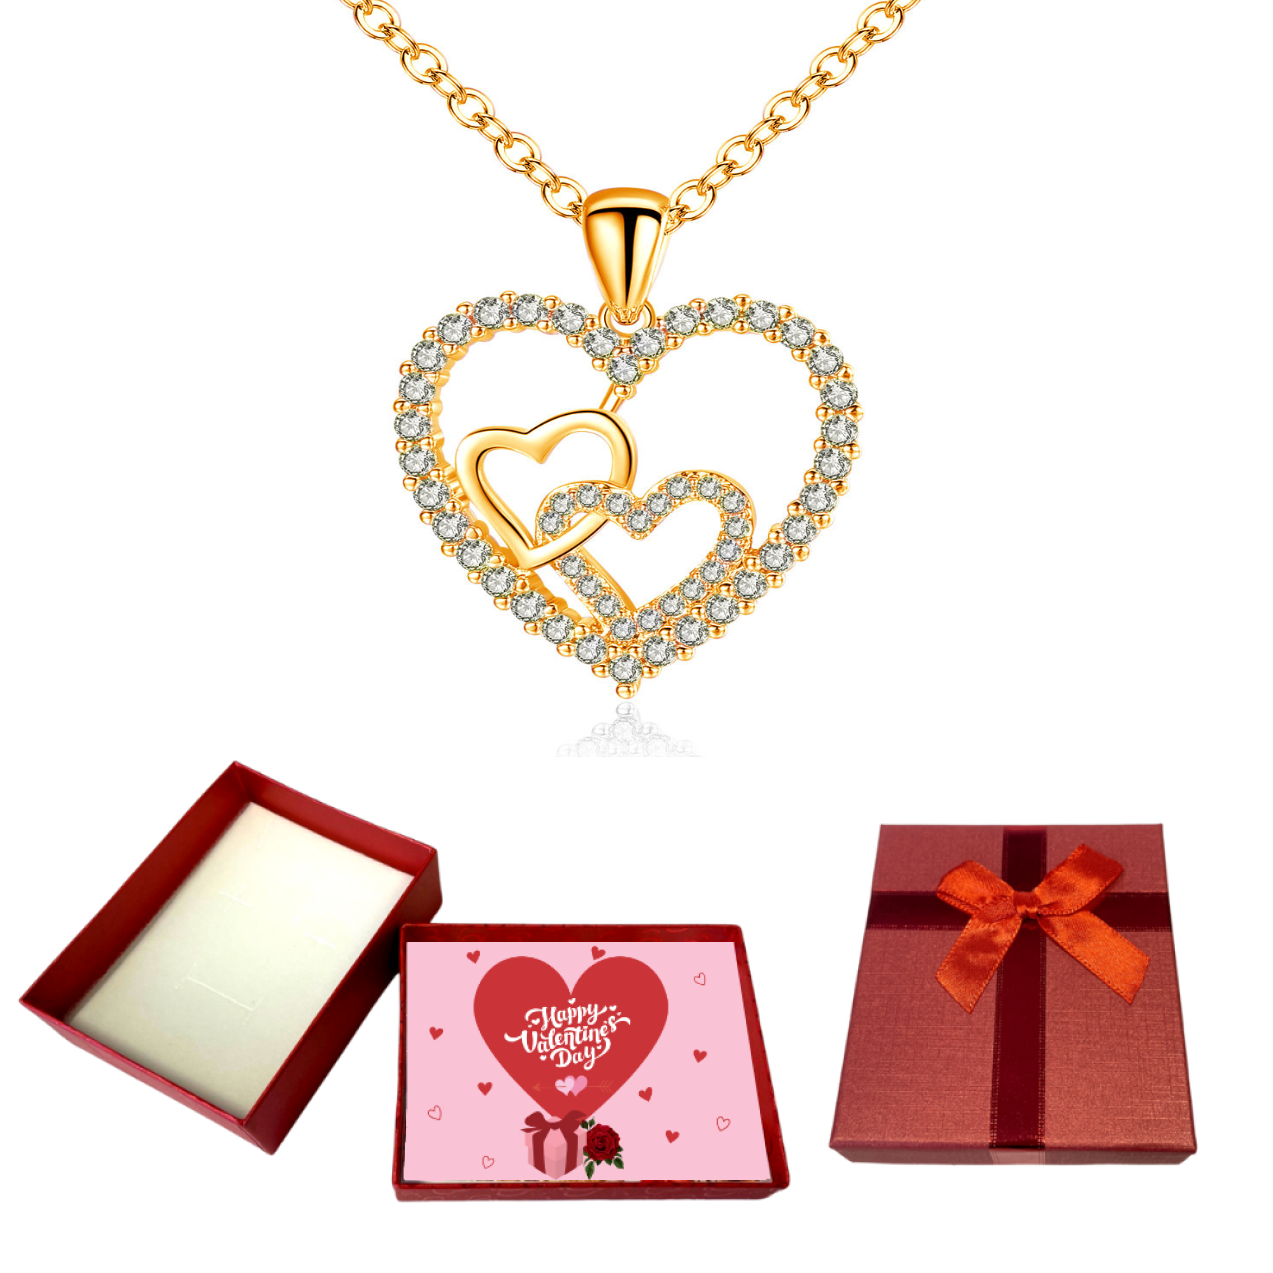 10 pcs - Double Heart Zircon Crystals Love Gold Tone Pendant Necklace With Valentine Gift Box|GCJ338-Valentine Box|UK SELLER